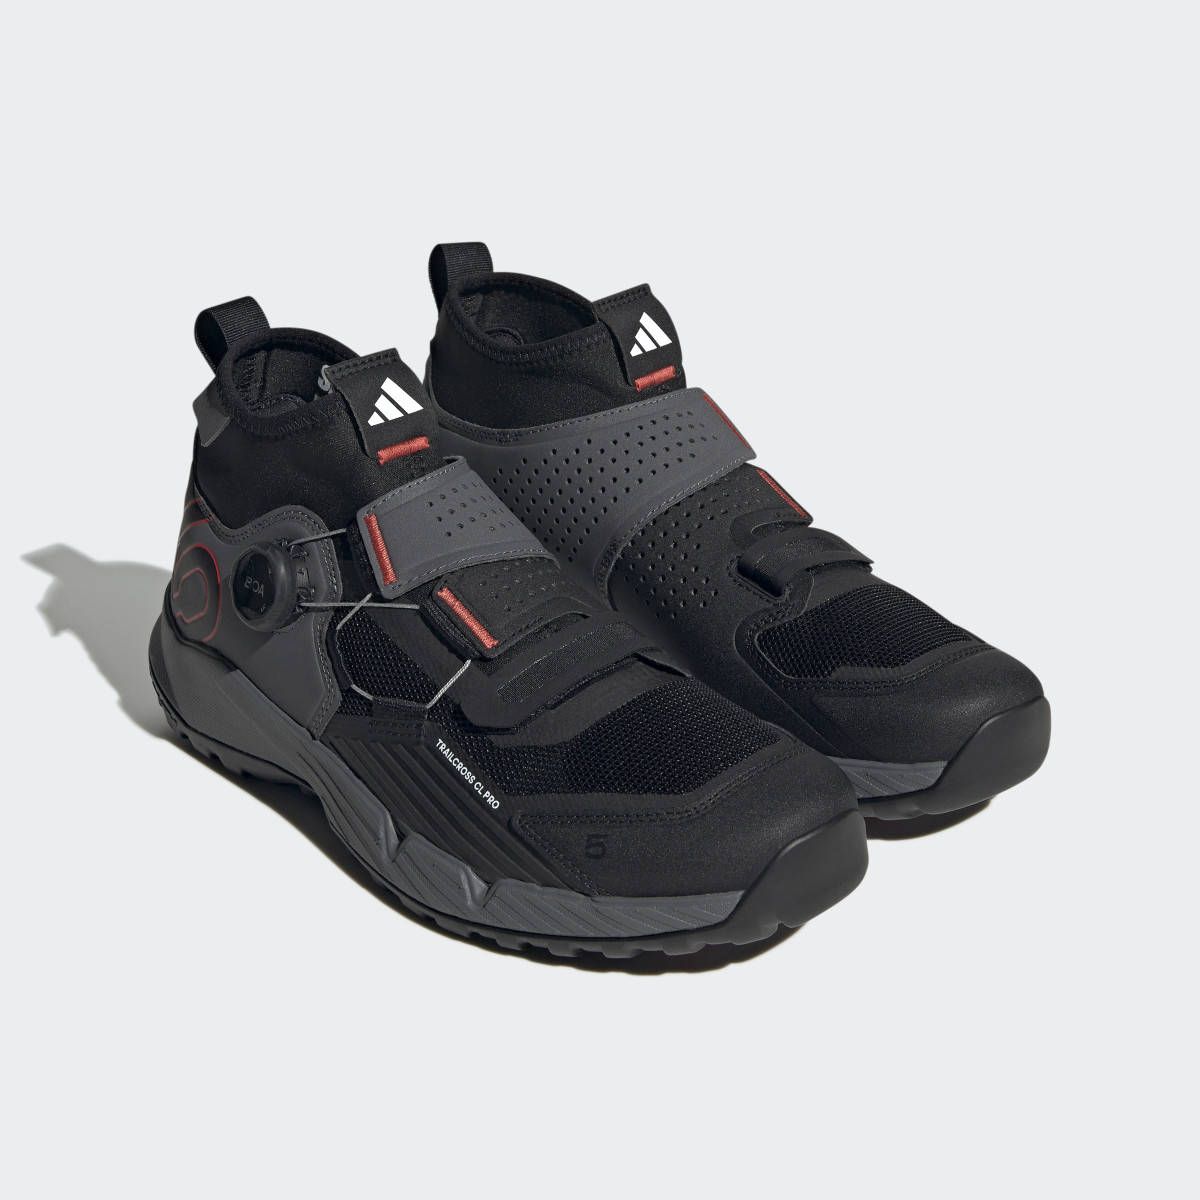 Adidas Five Ten Trailcross Pro Clip-in Mountain Bike Shoes. 5